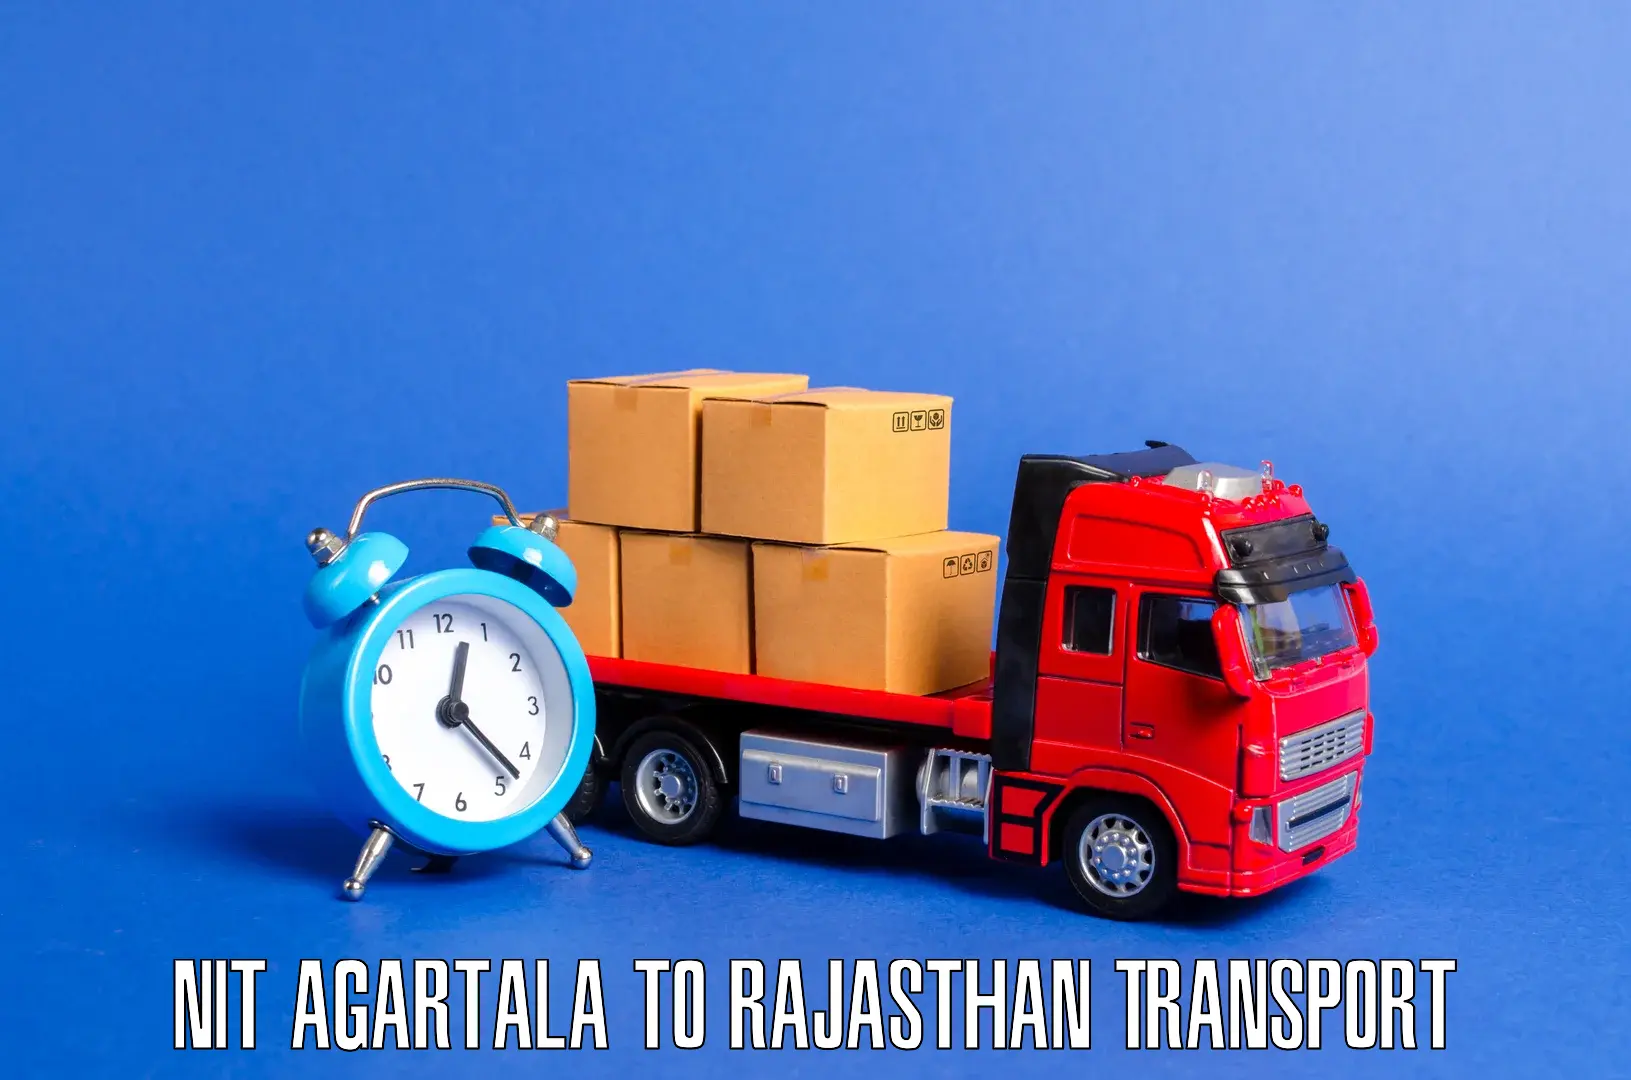 Lorry transport service NIT Agartala to Shrimadhopur